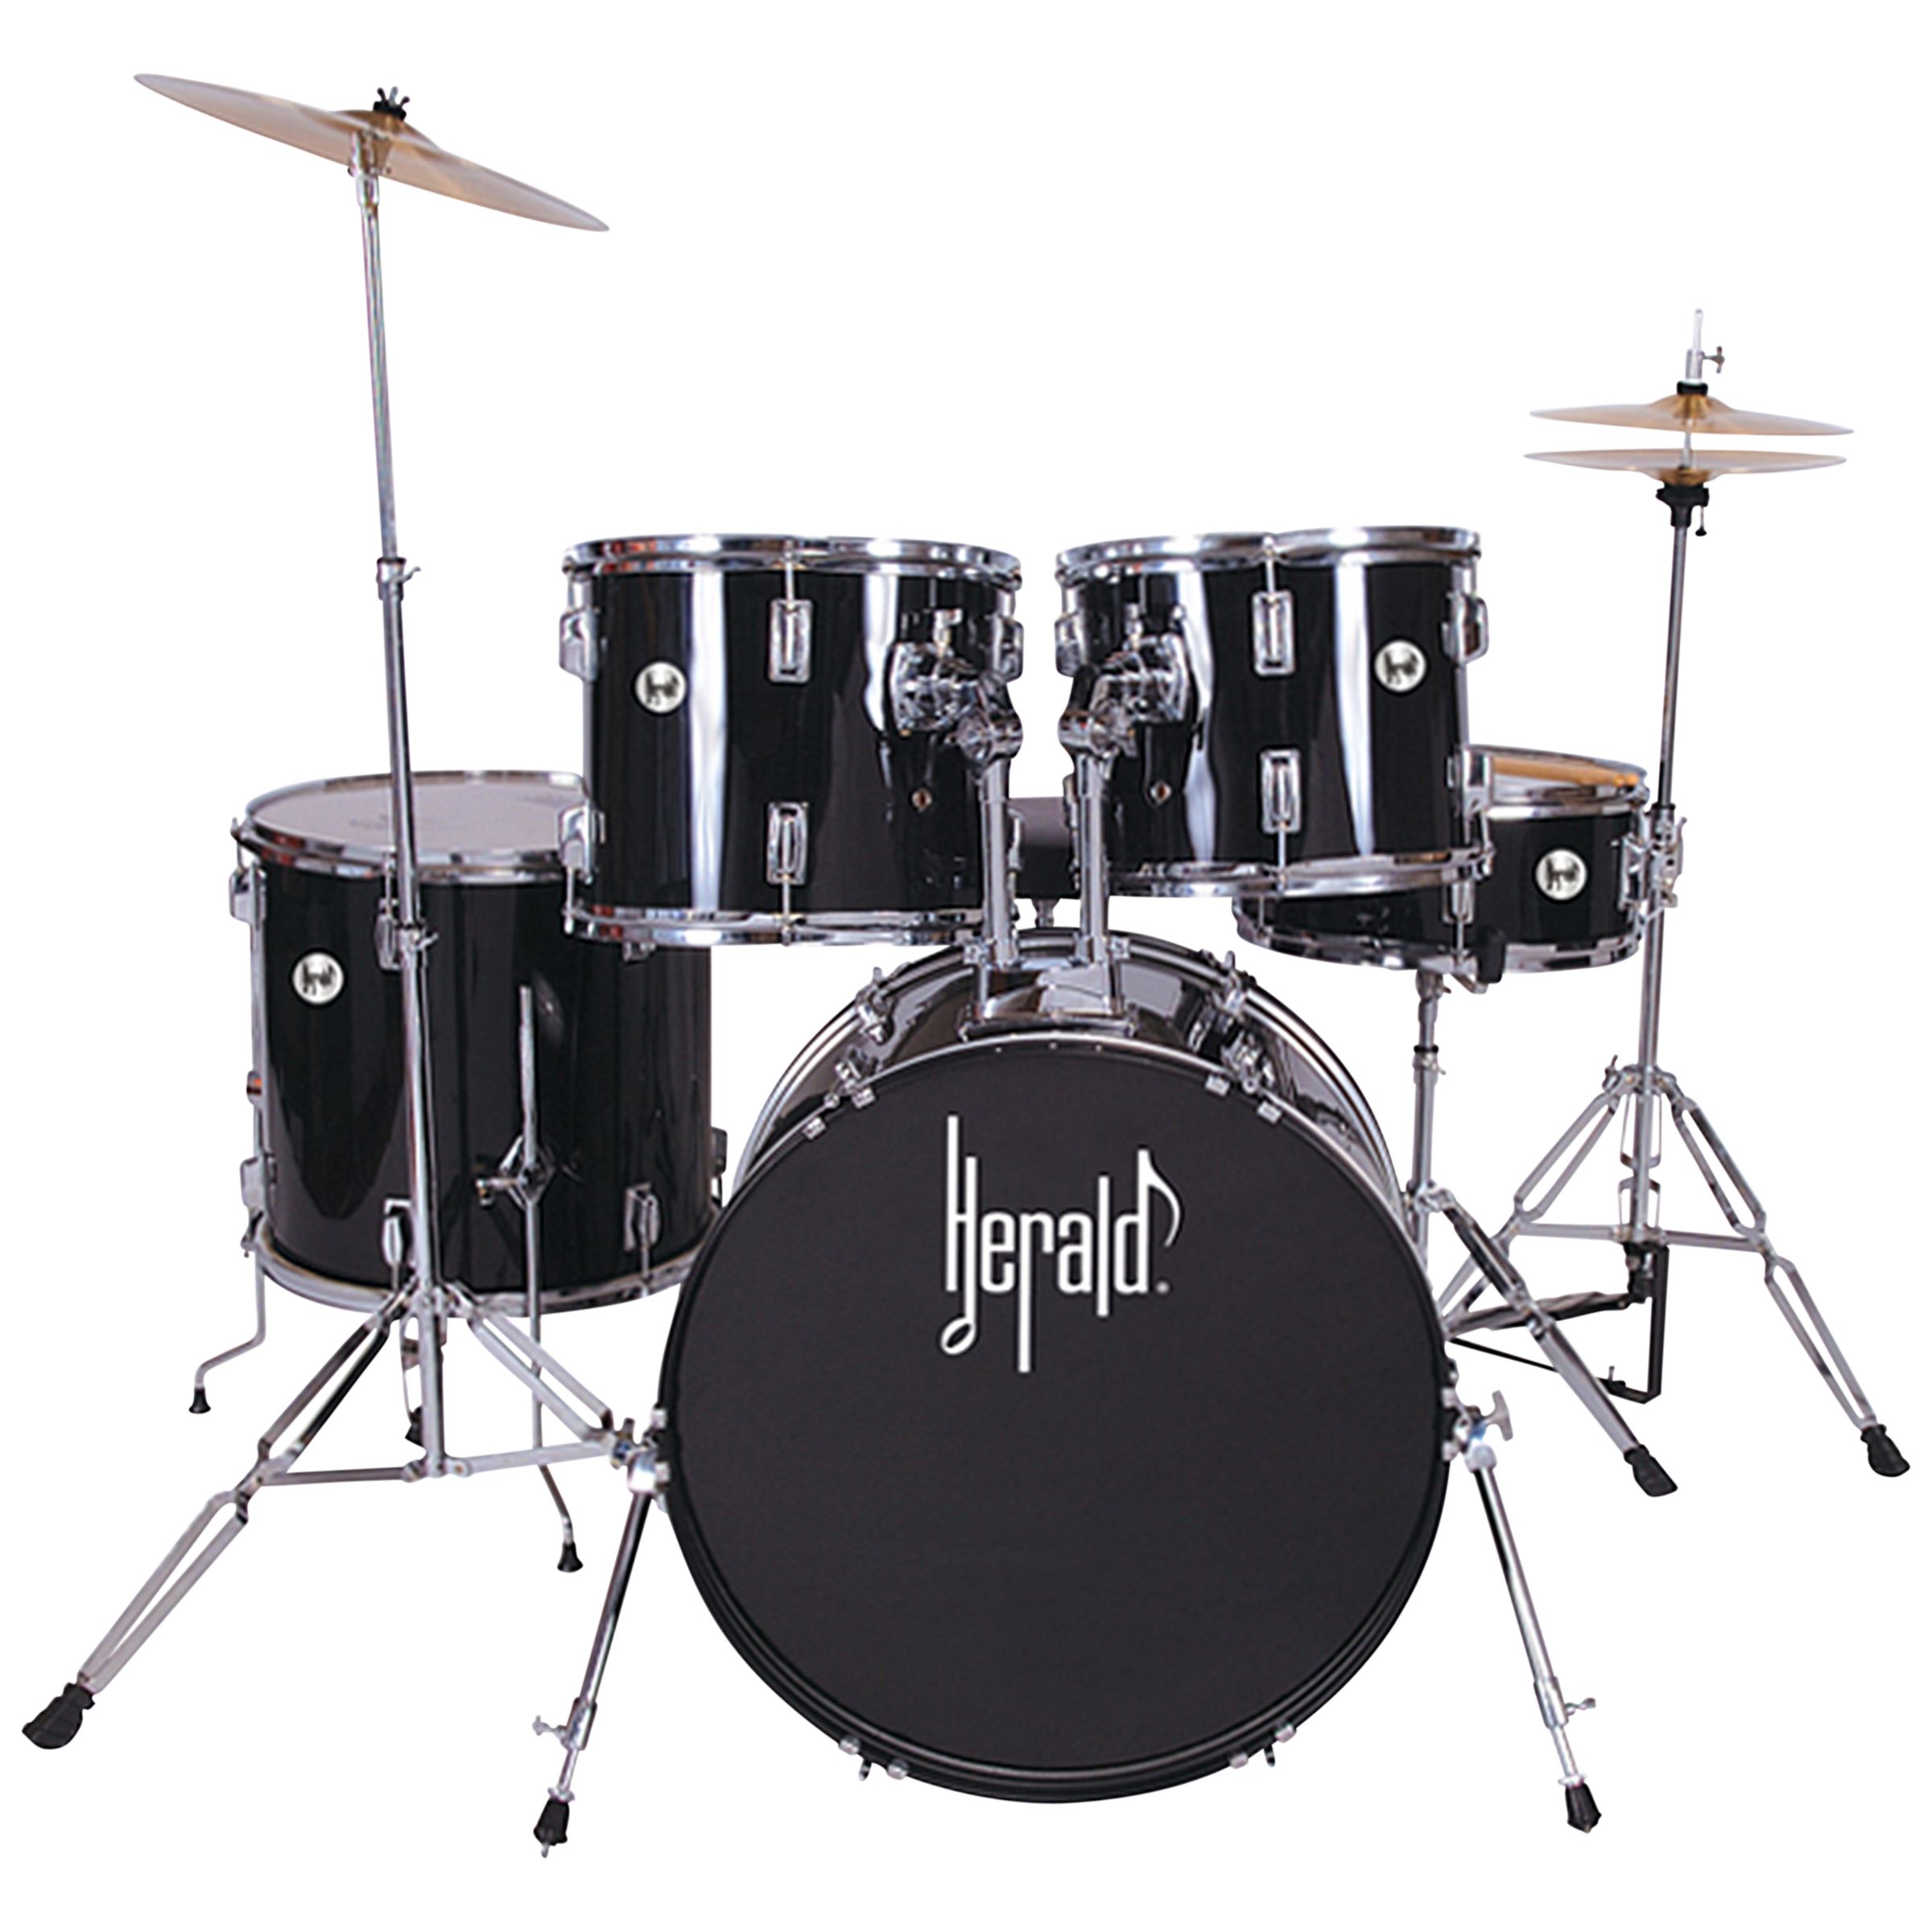 Herald 5-Piece Full Size Drum Kit, Black